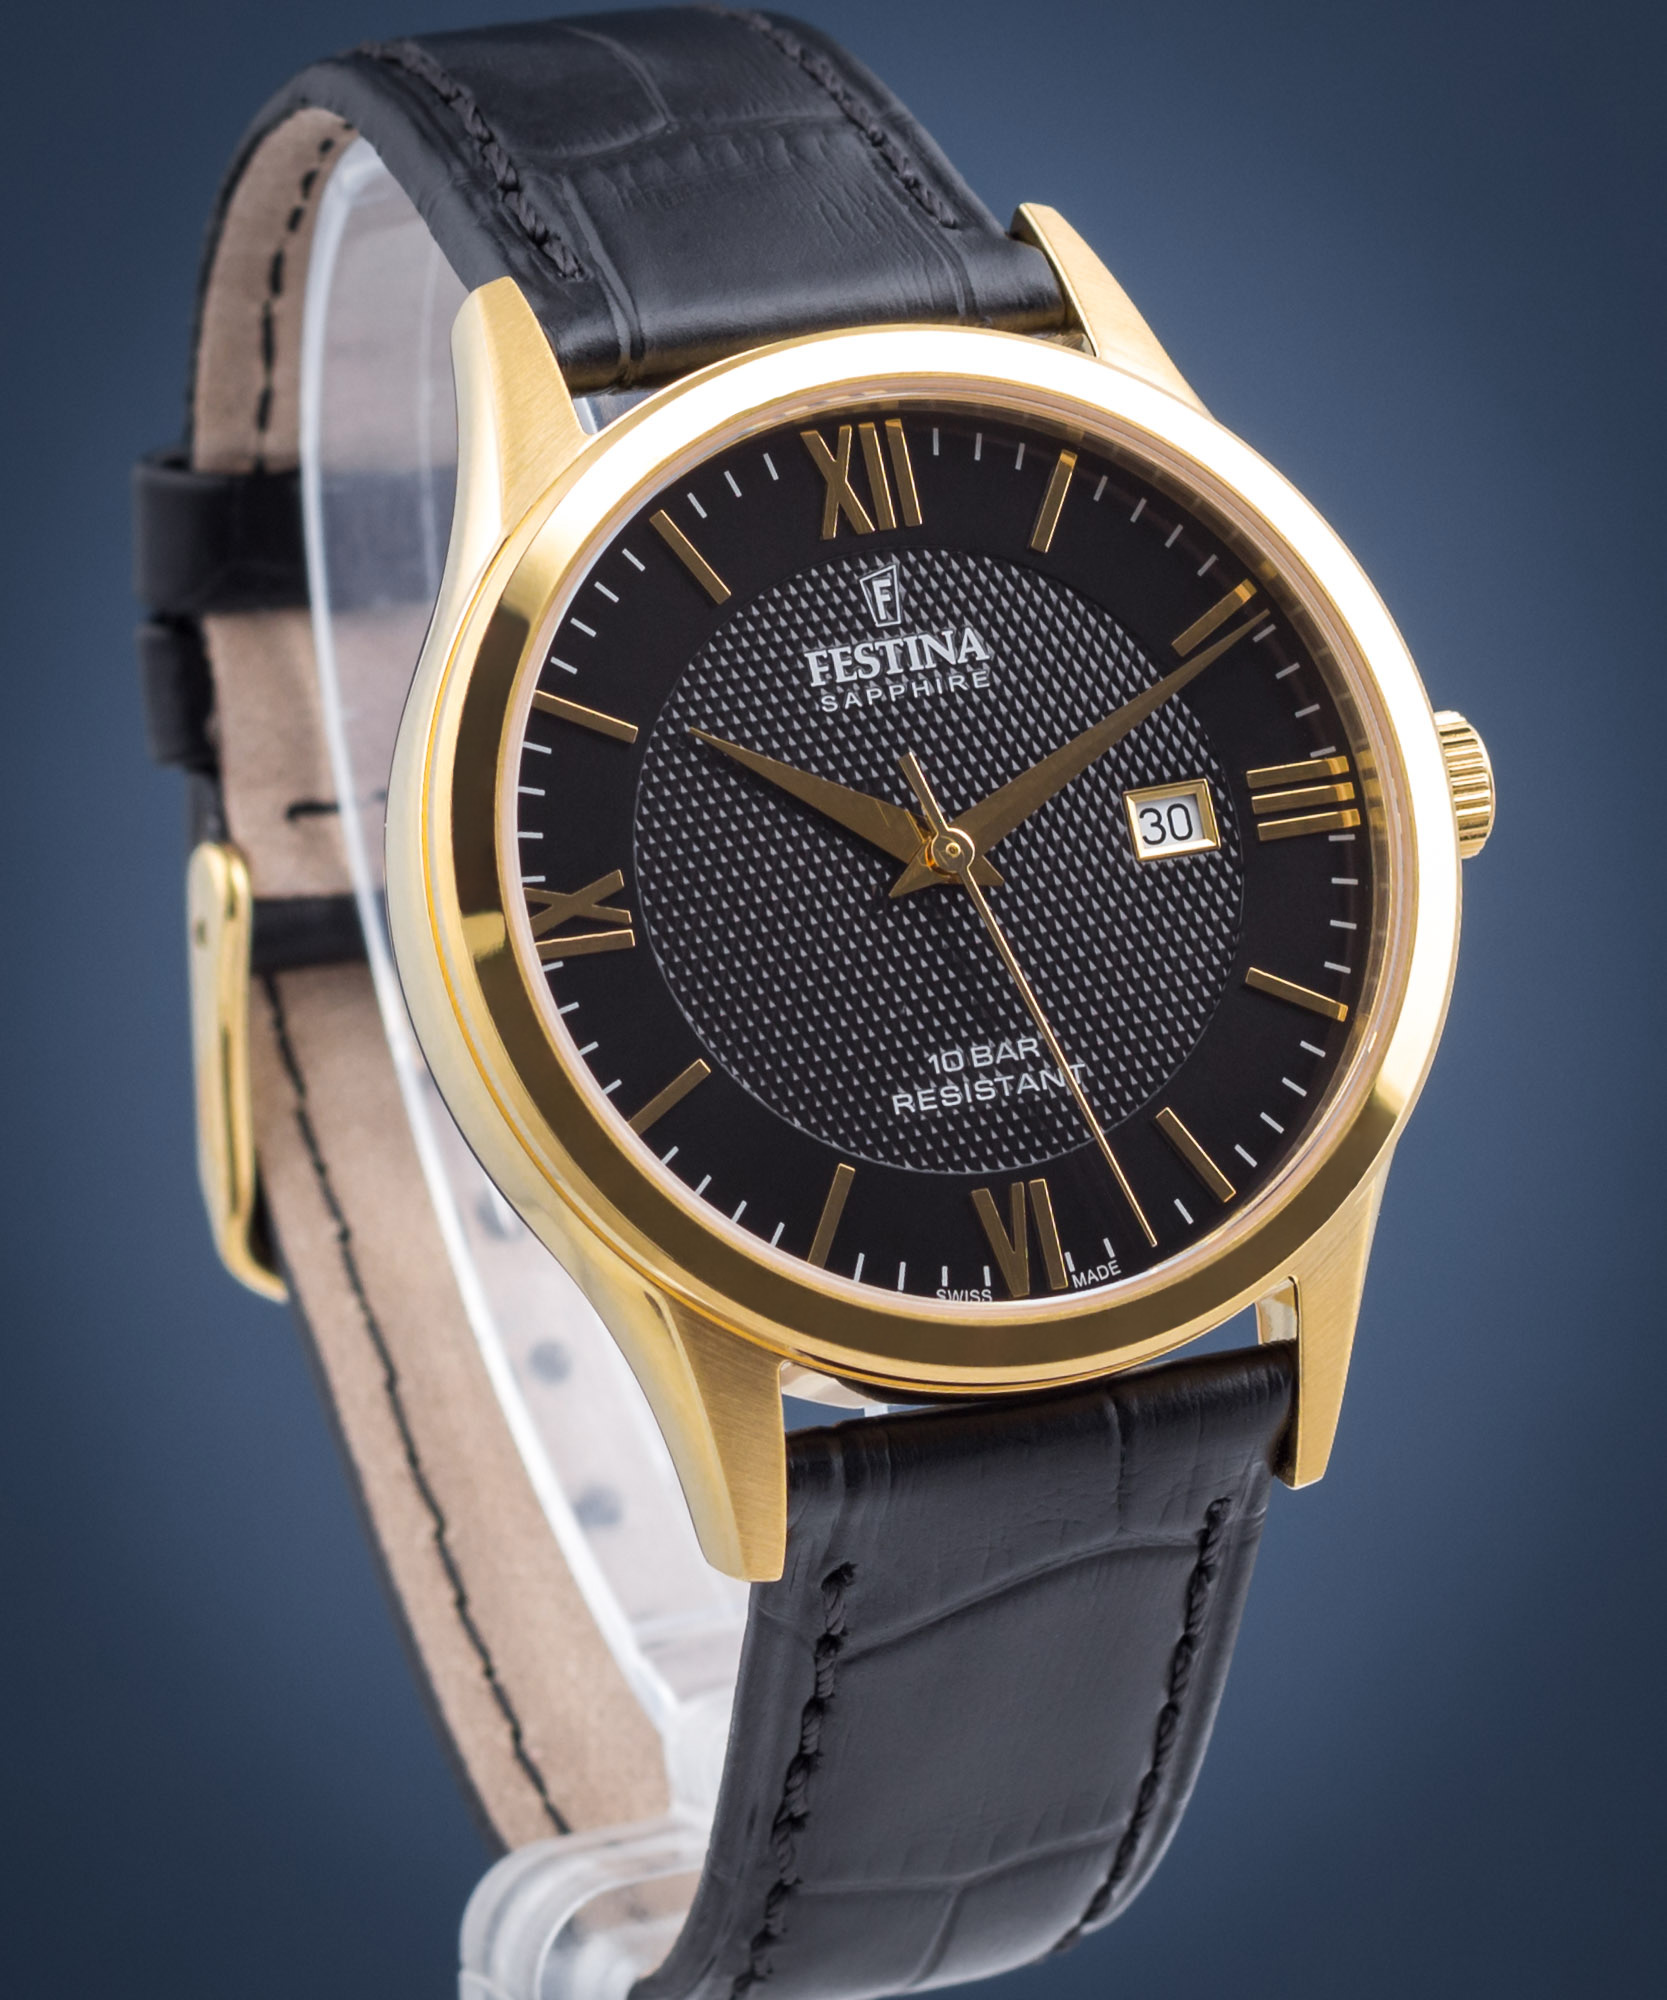 Festina F20010/4 - Made Swiss • Watch Capsule